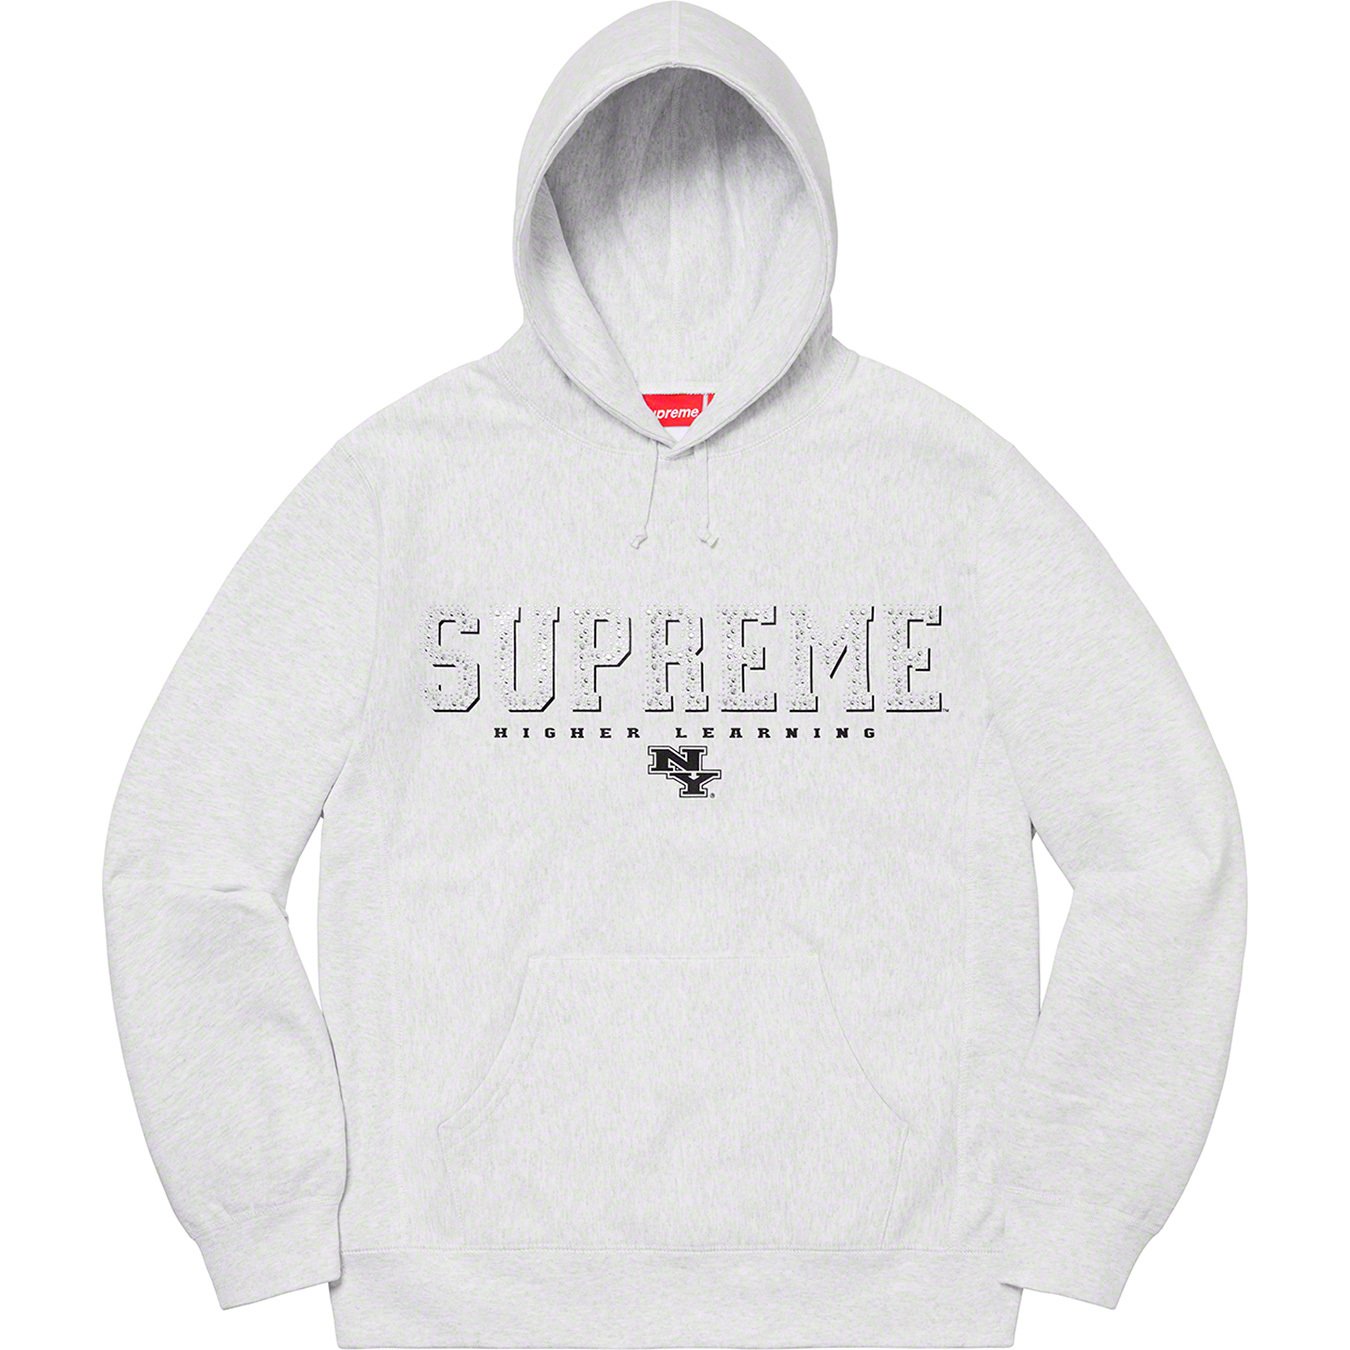 Supreme Gems Hooded Sweatshirt XL